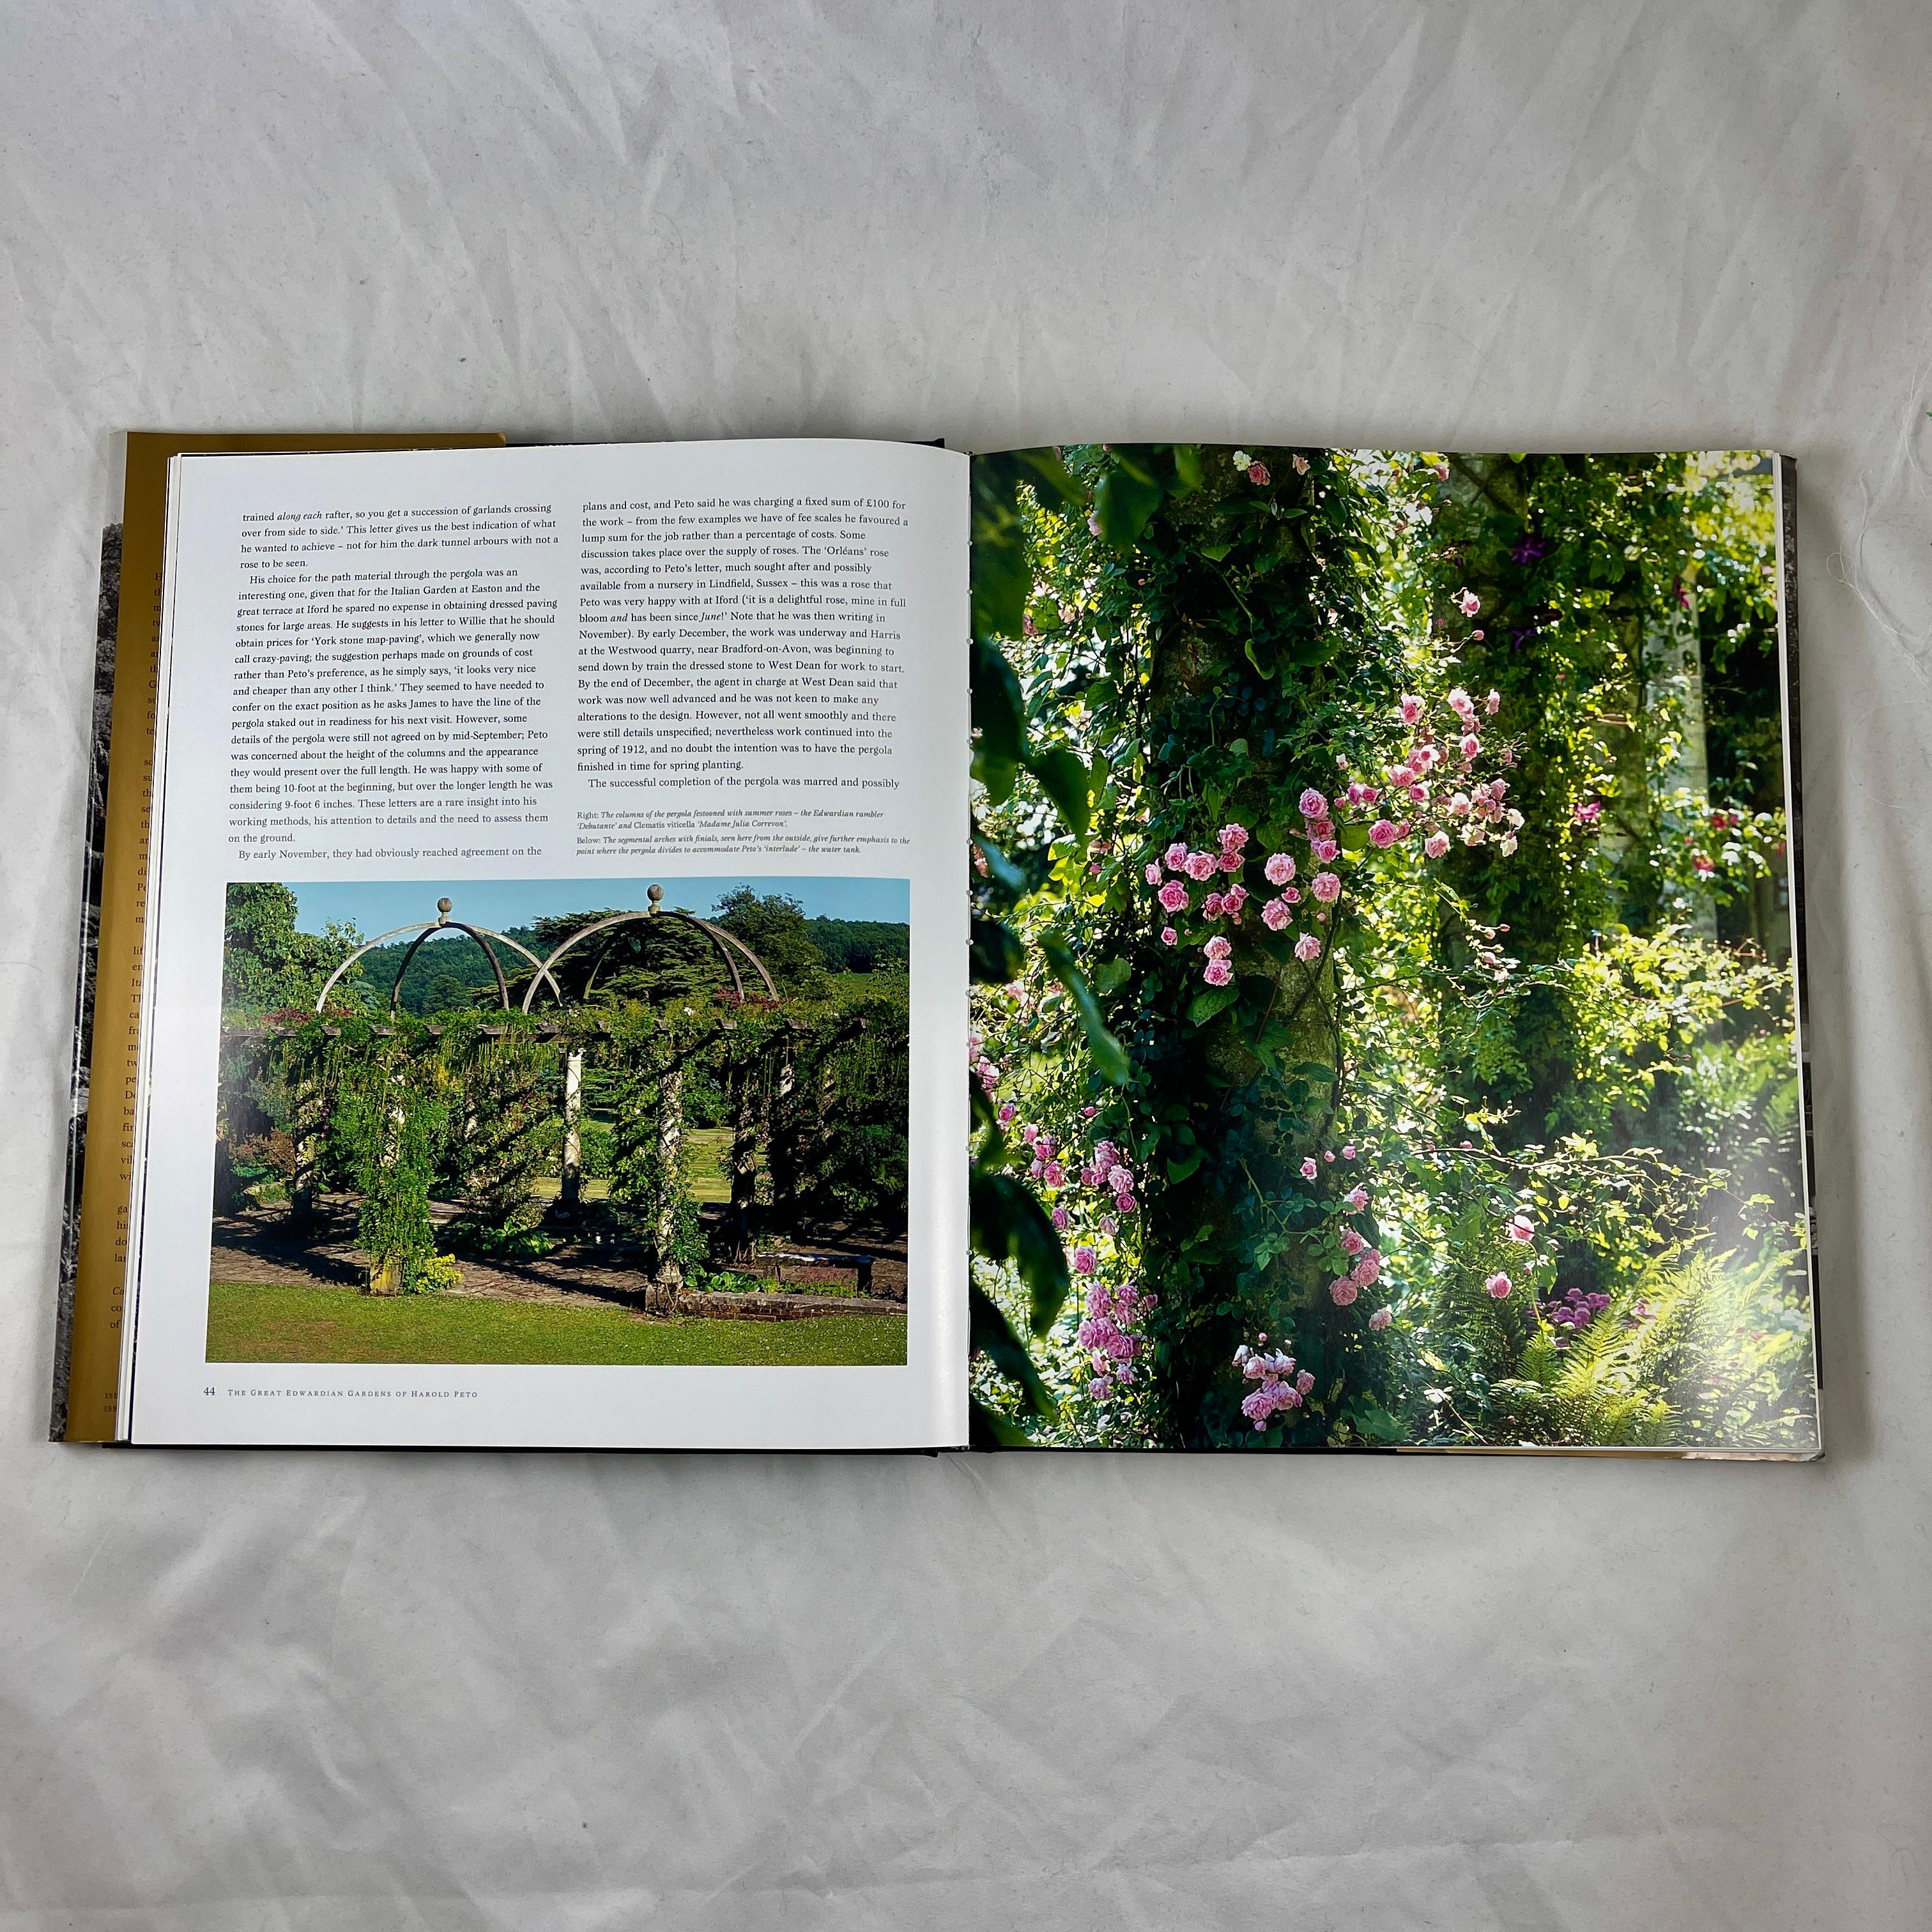 English The Great Edwardian Gardens of Harold Peto, Hardcover Book –2007